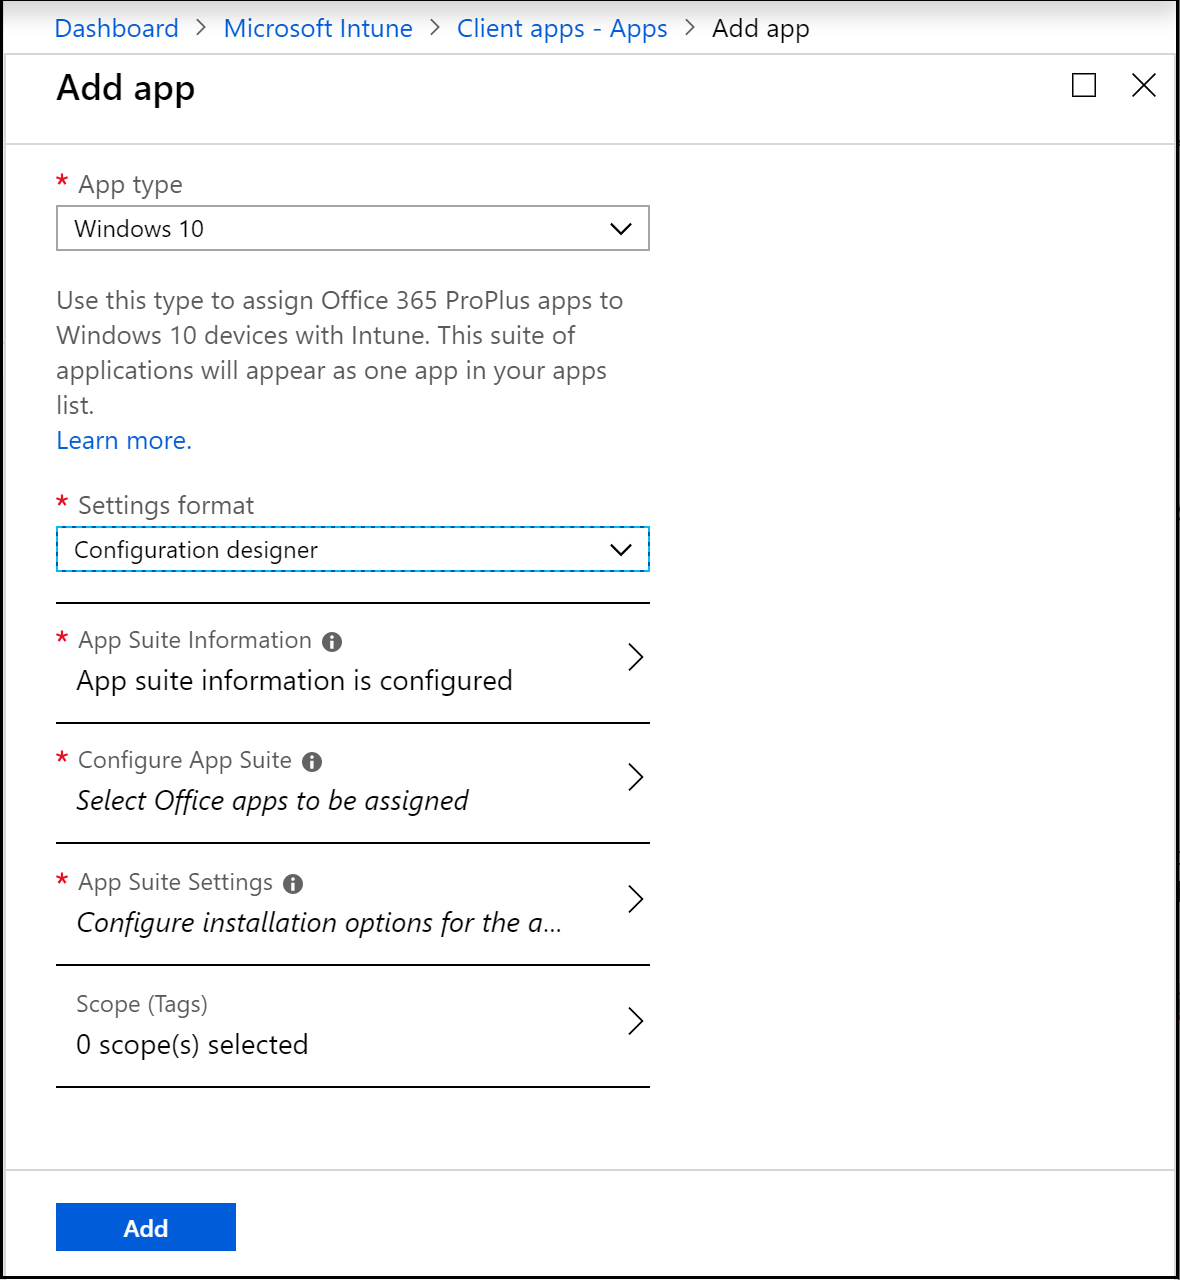 Add Microsoft 365 Apps - Configuration designer